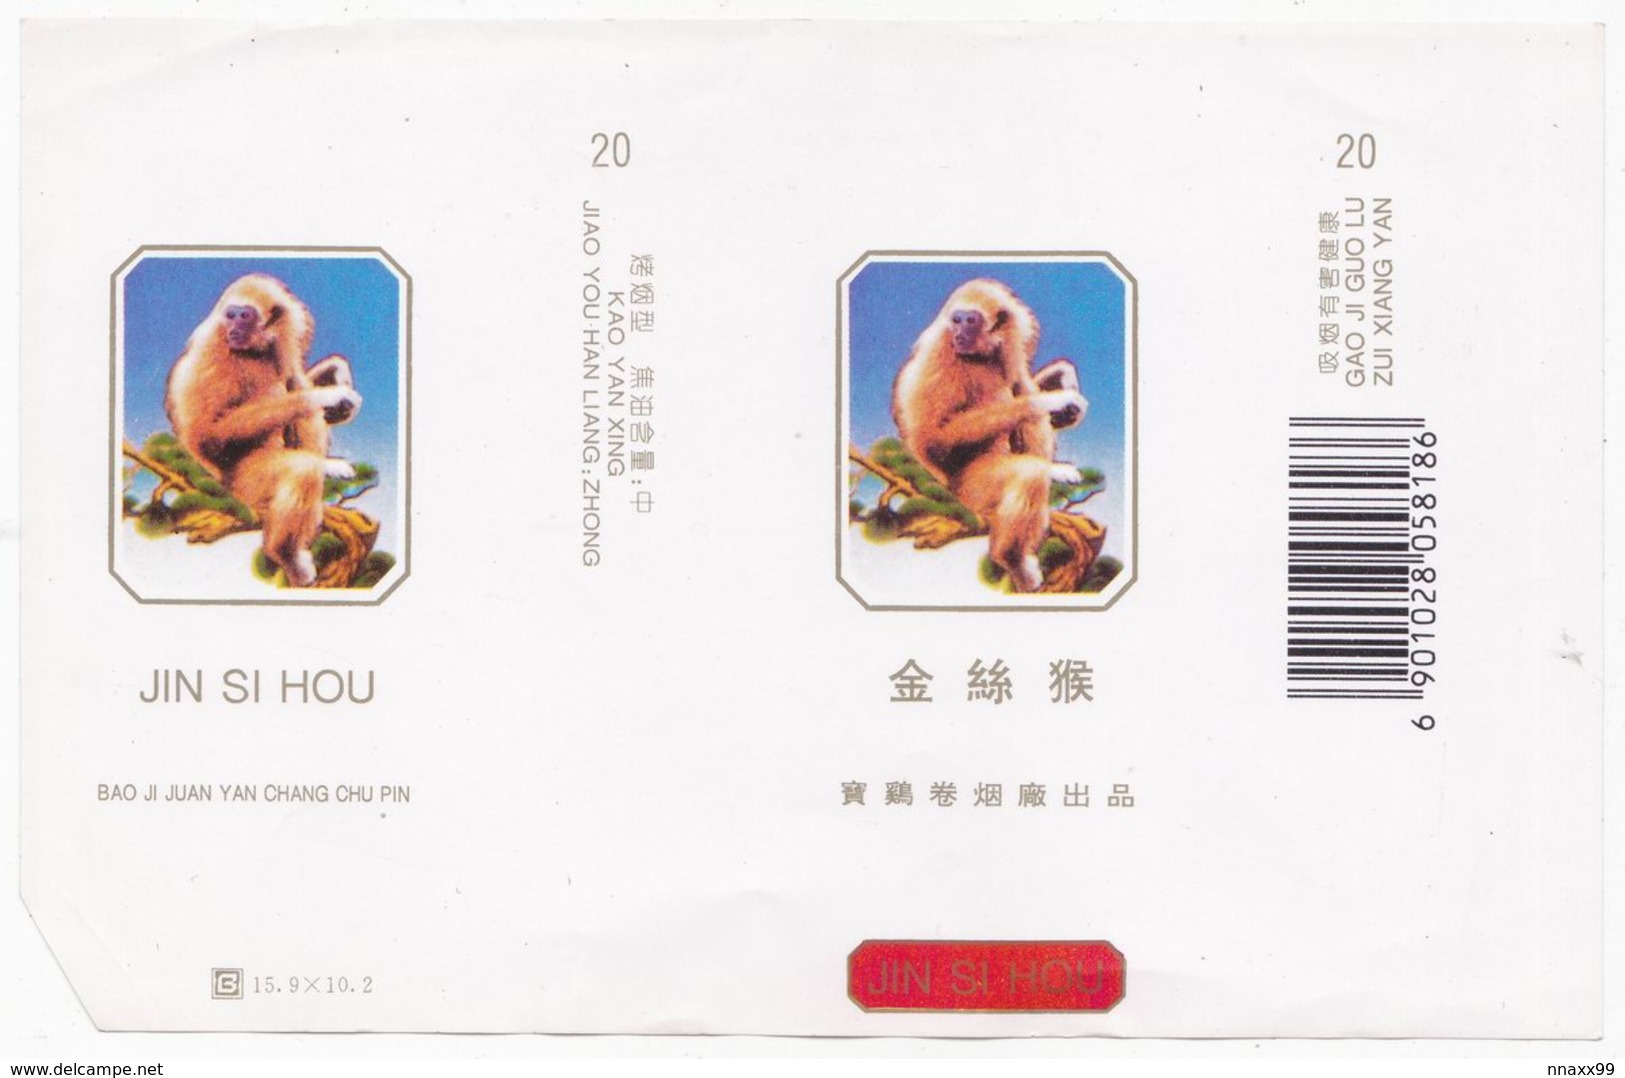 Monkey - Female White-handed Gibbon, JINSIHOU Cigarette Box, Soft, White, Baoji Cigarette Factory, Shaanxi, China - Etuis à Cigarettes Vides